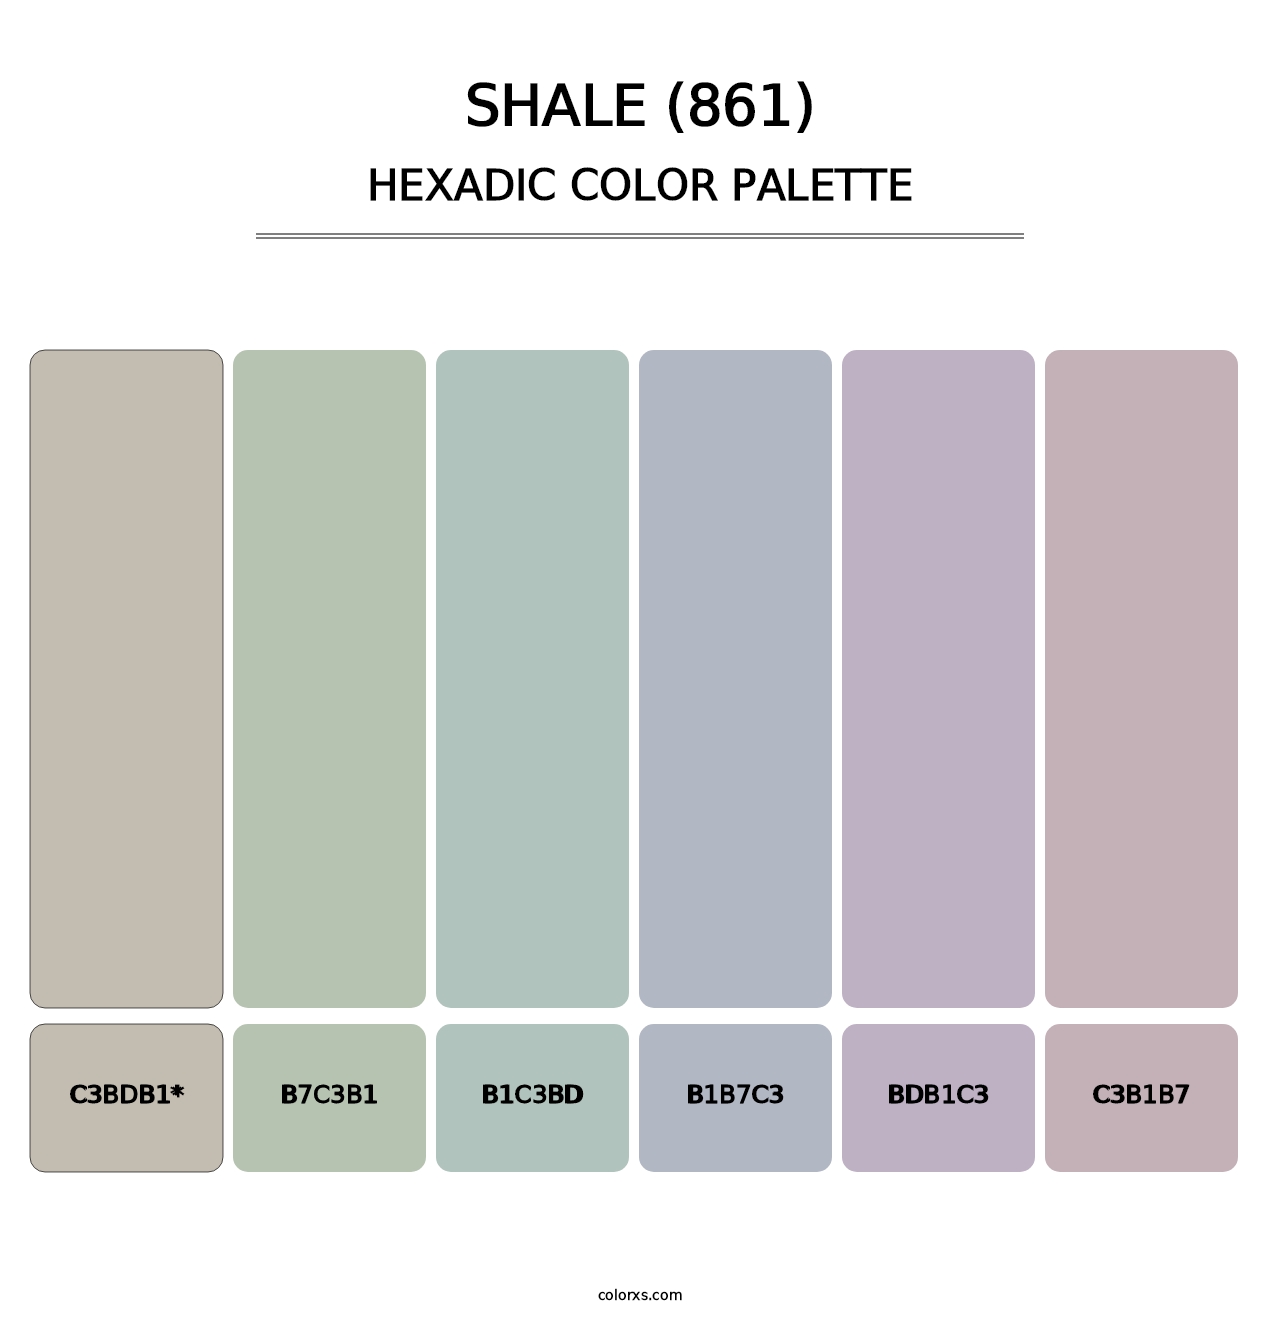 Shale (861) - Hexadic Color Palette